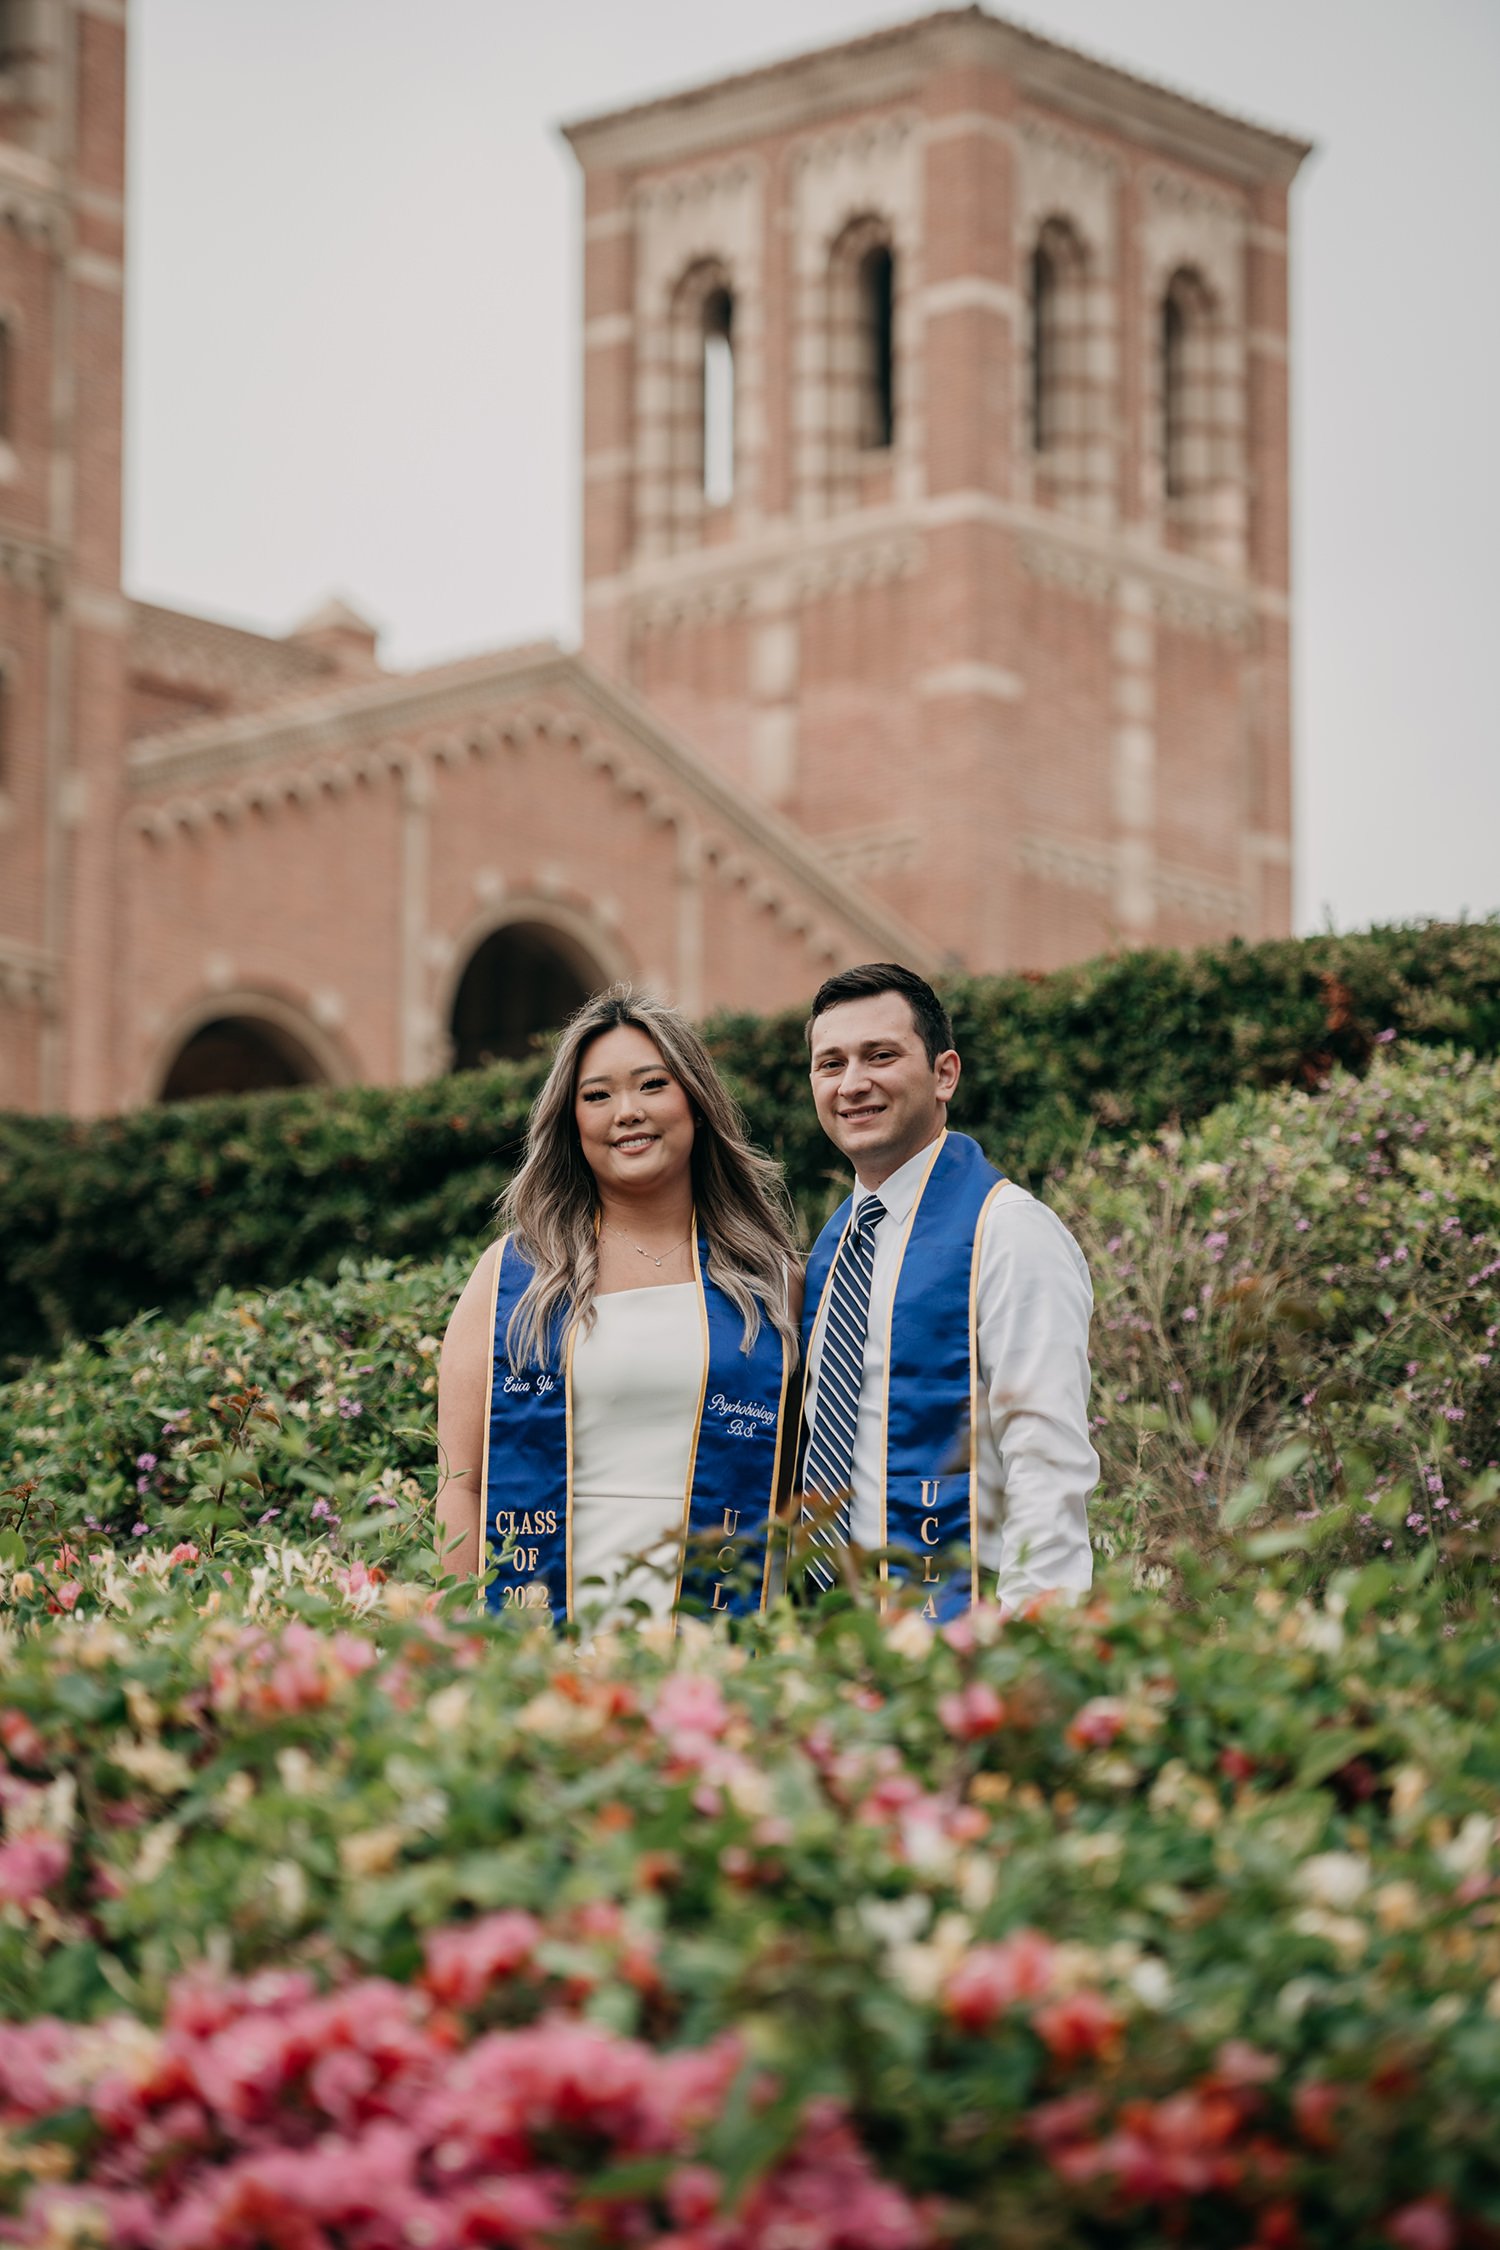 ucla-couples-graduation-portrait-losangeles-southern-california-photographer-6.jpg